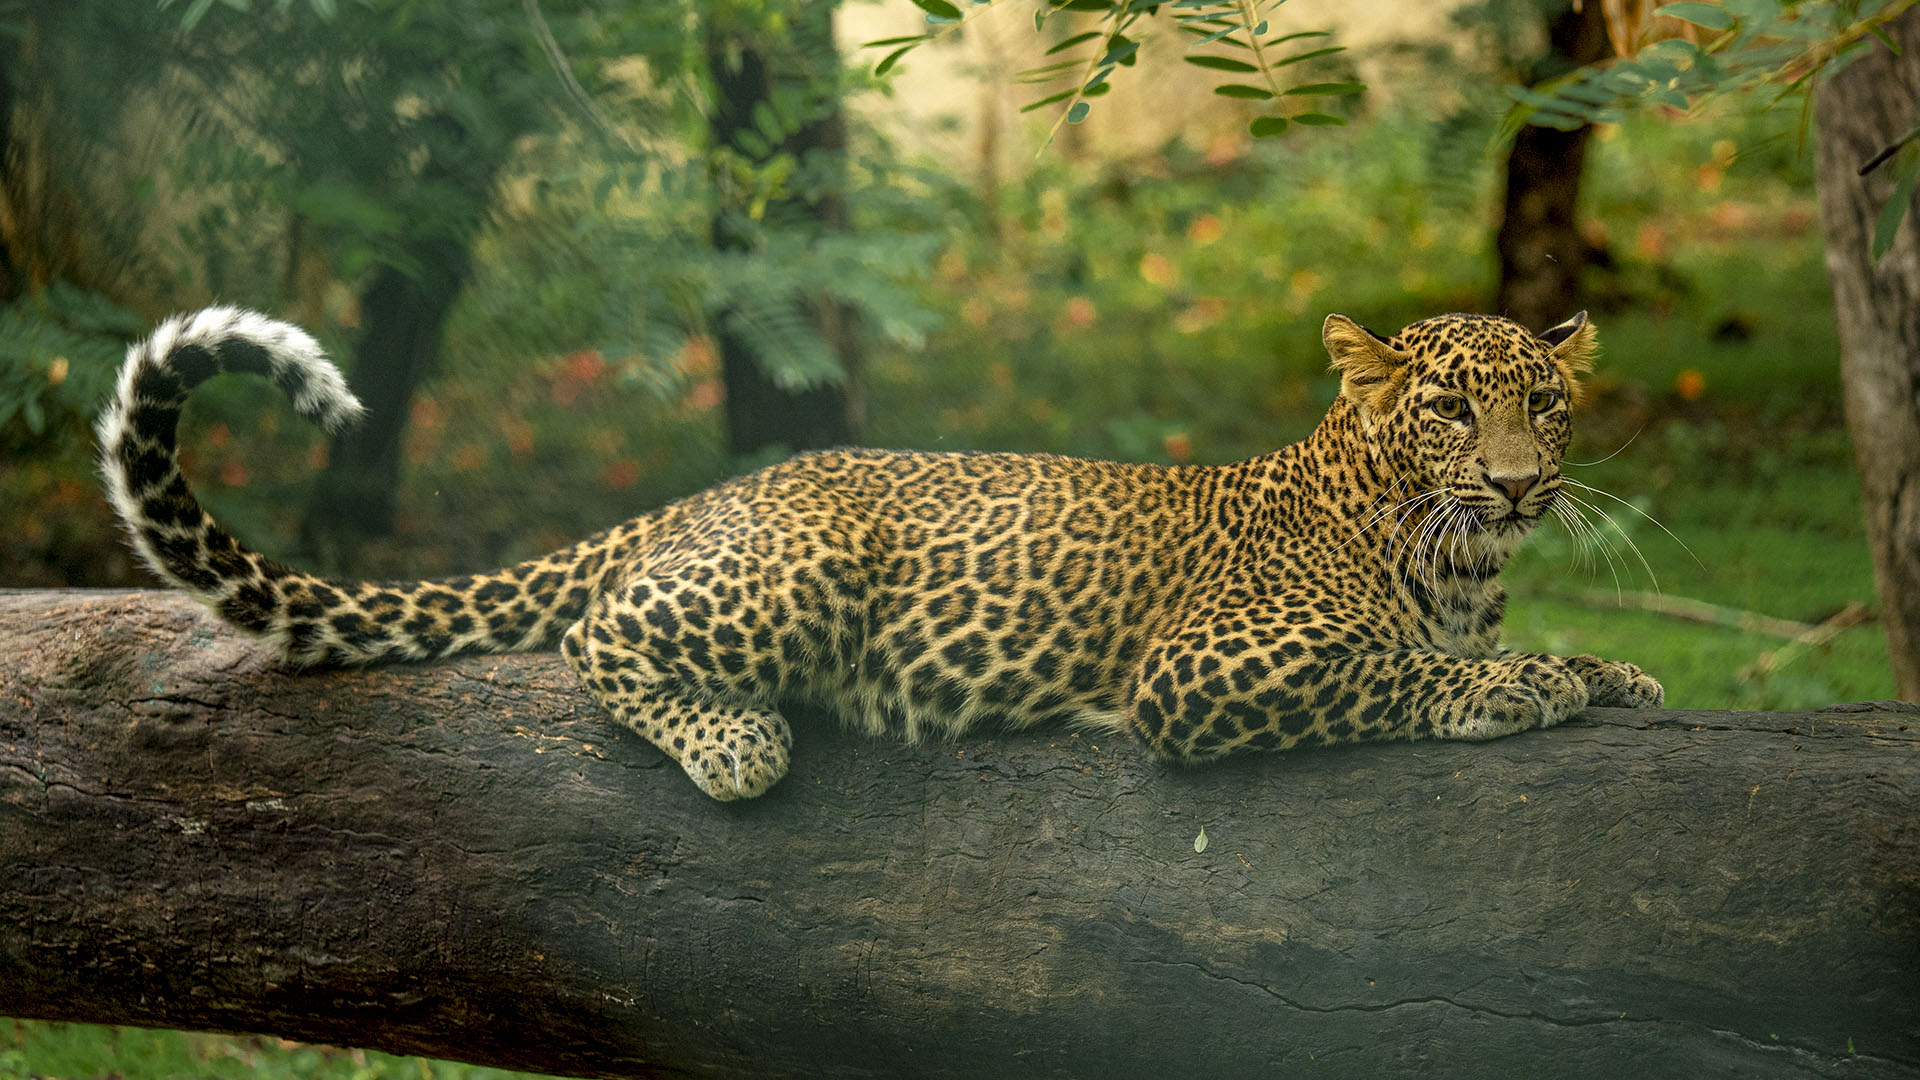 https://wildlifesos.org/wp-content/uploads/2020/03/home-leopard-july.jpg